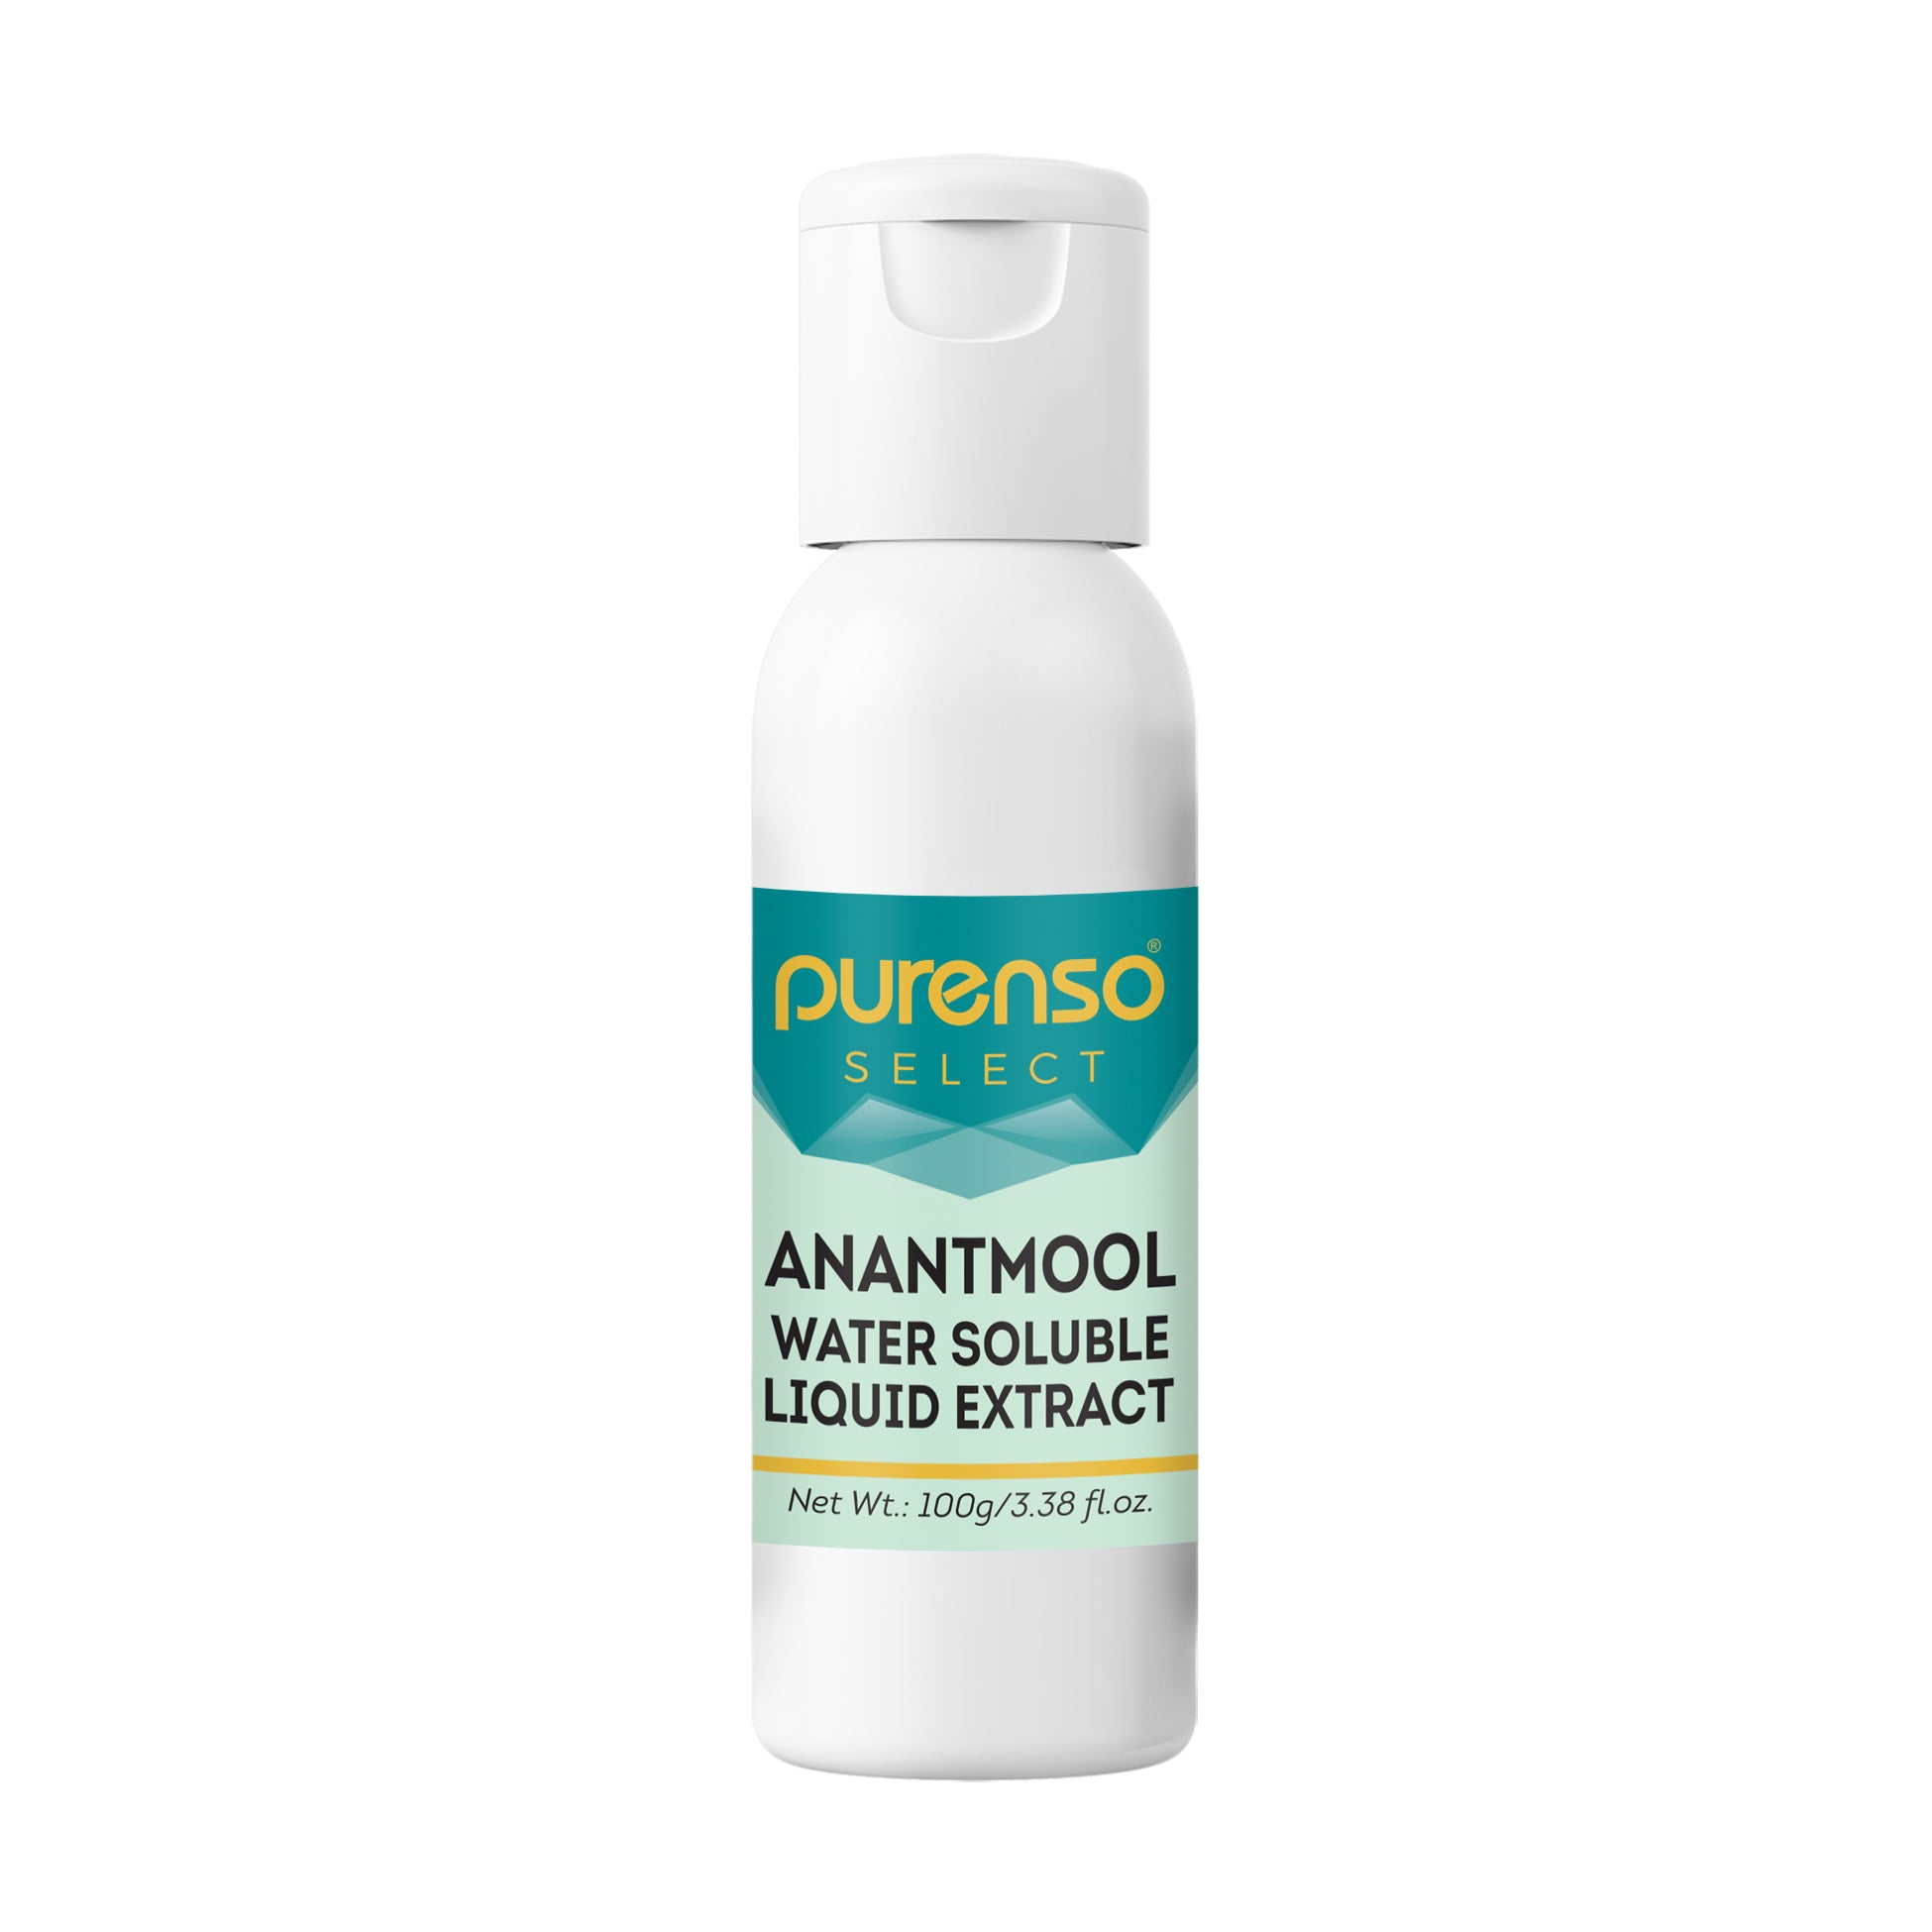 Anantmool Liquid Extract - Water Soluble